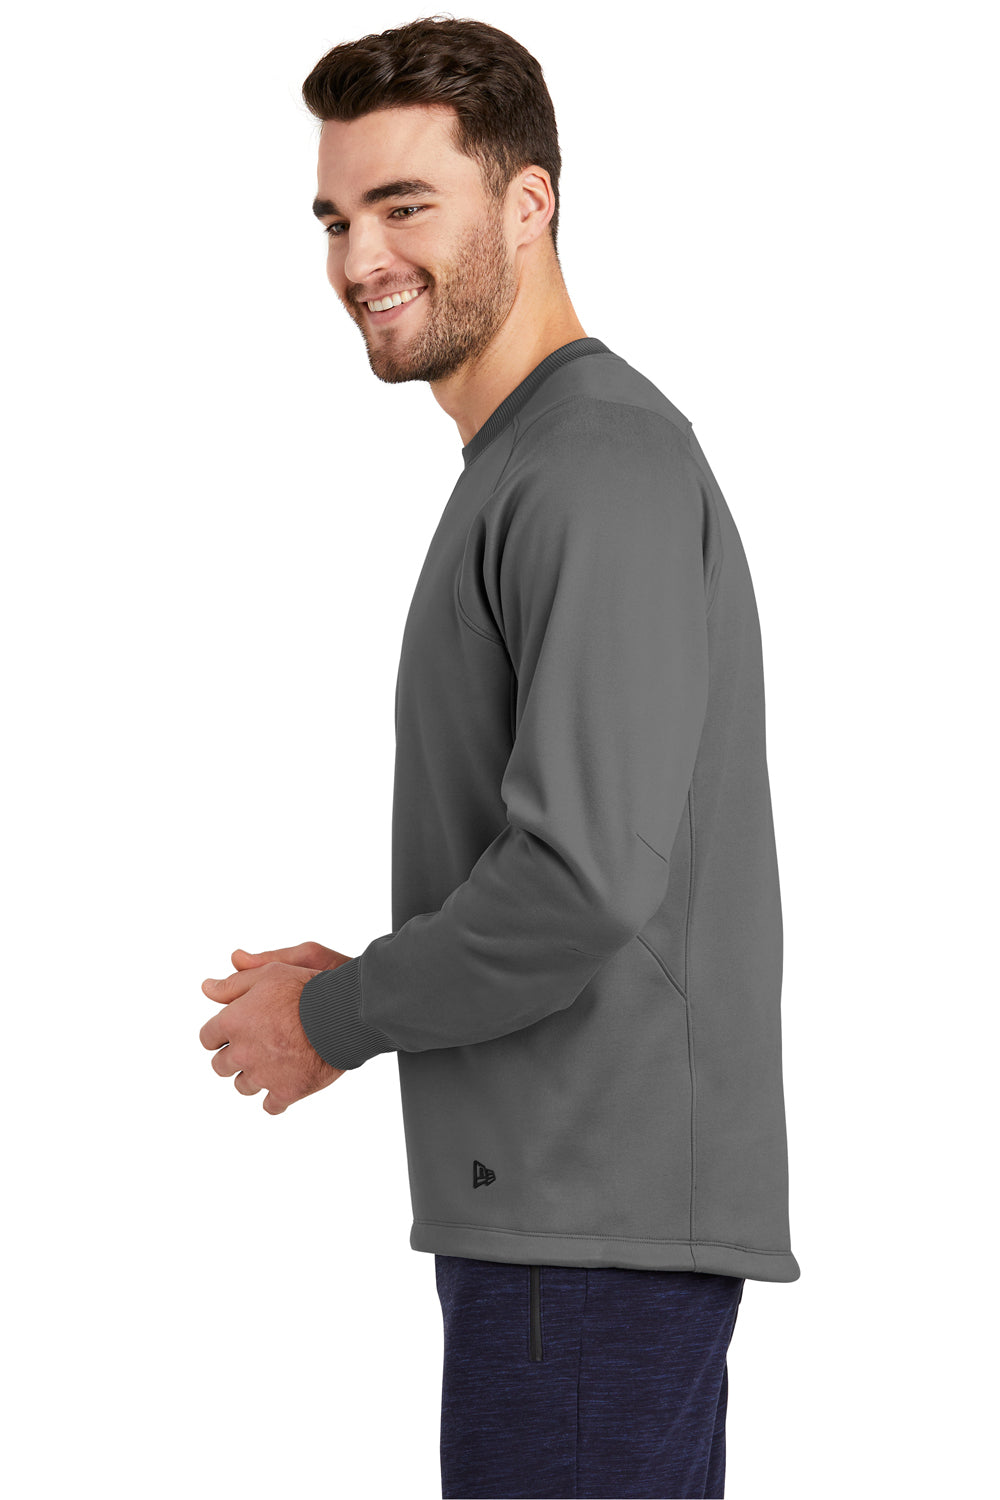 New Era NEA521 Mens Venue Moisture Wicking Fleece Crewneck Sweatshirt Graphite Grey Side